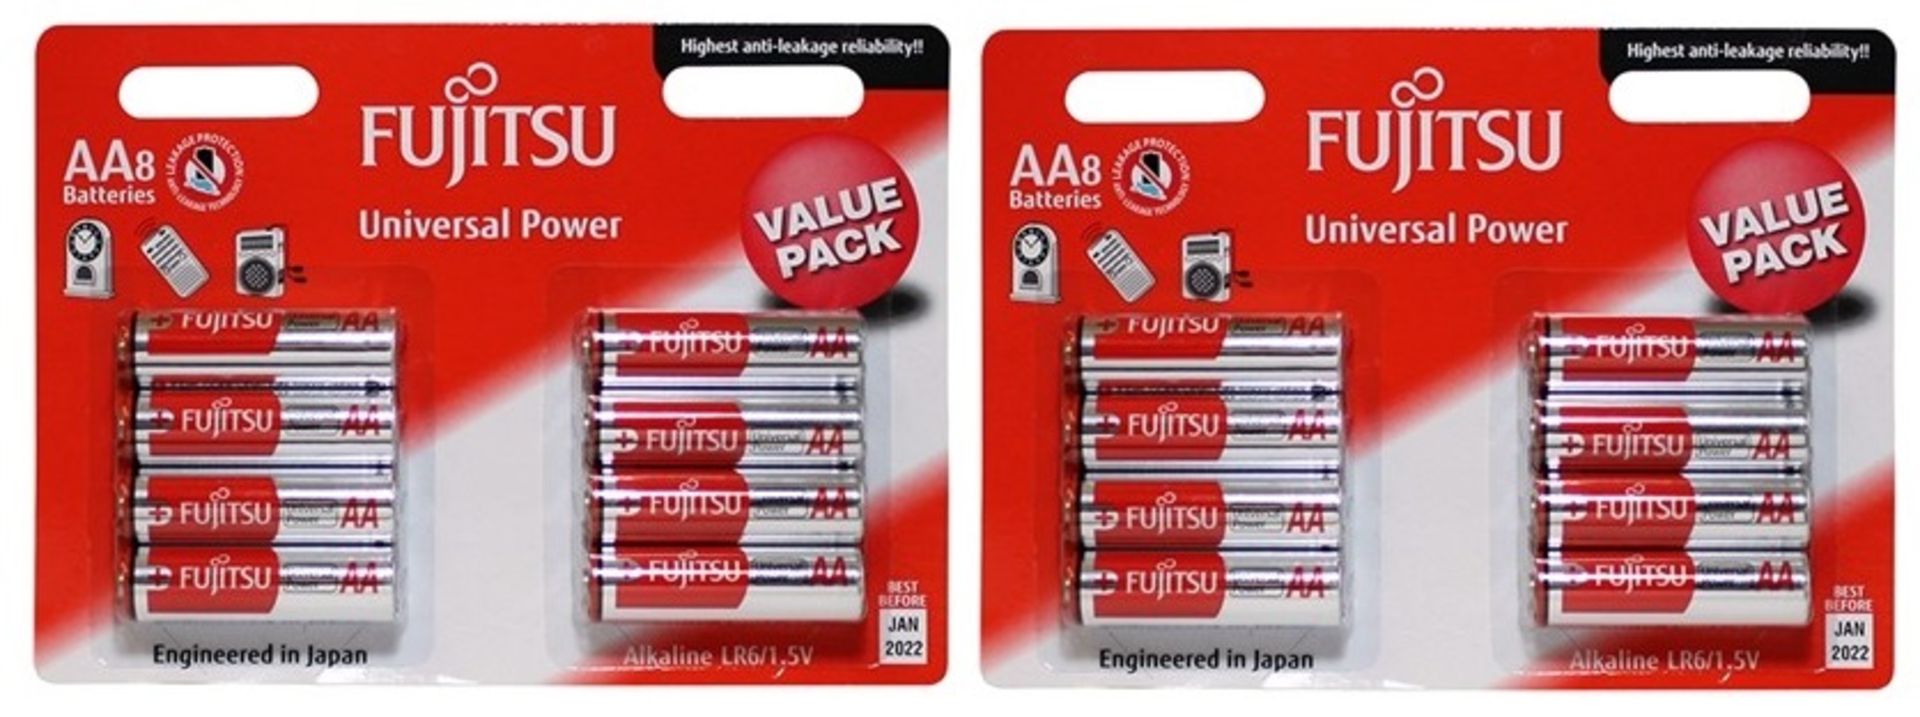 V Brand New Two Packs of Eight Fujitsu AA Universal Power Batteries (16 Batteries in Total) eBay